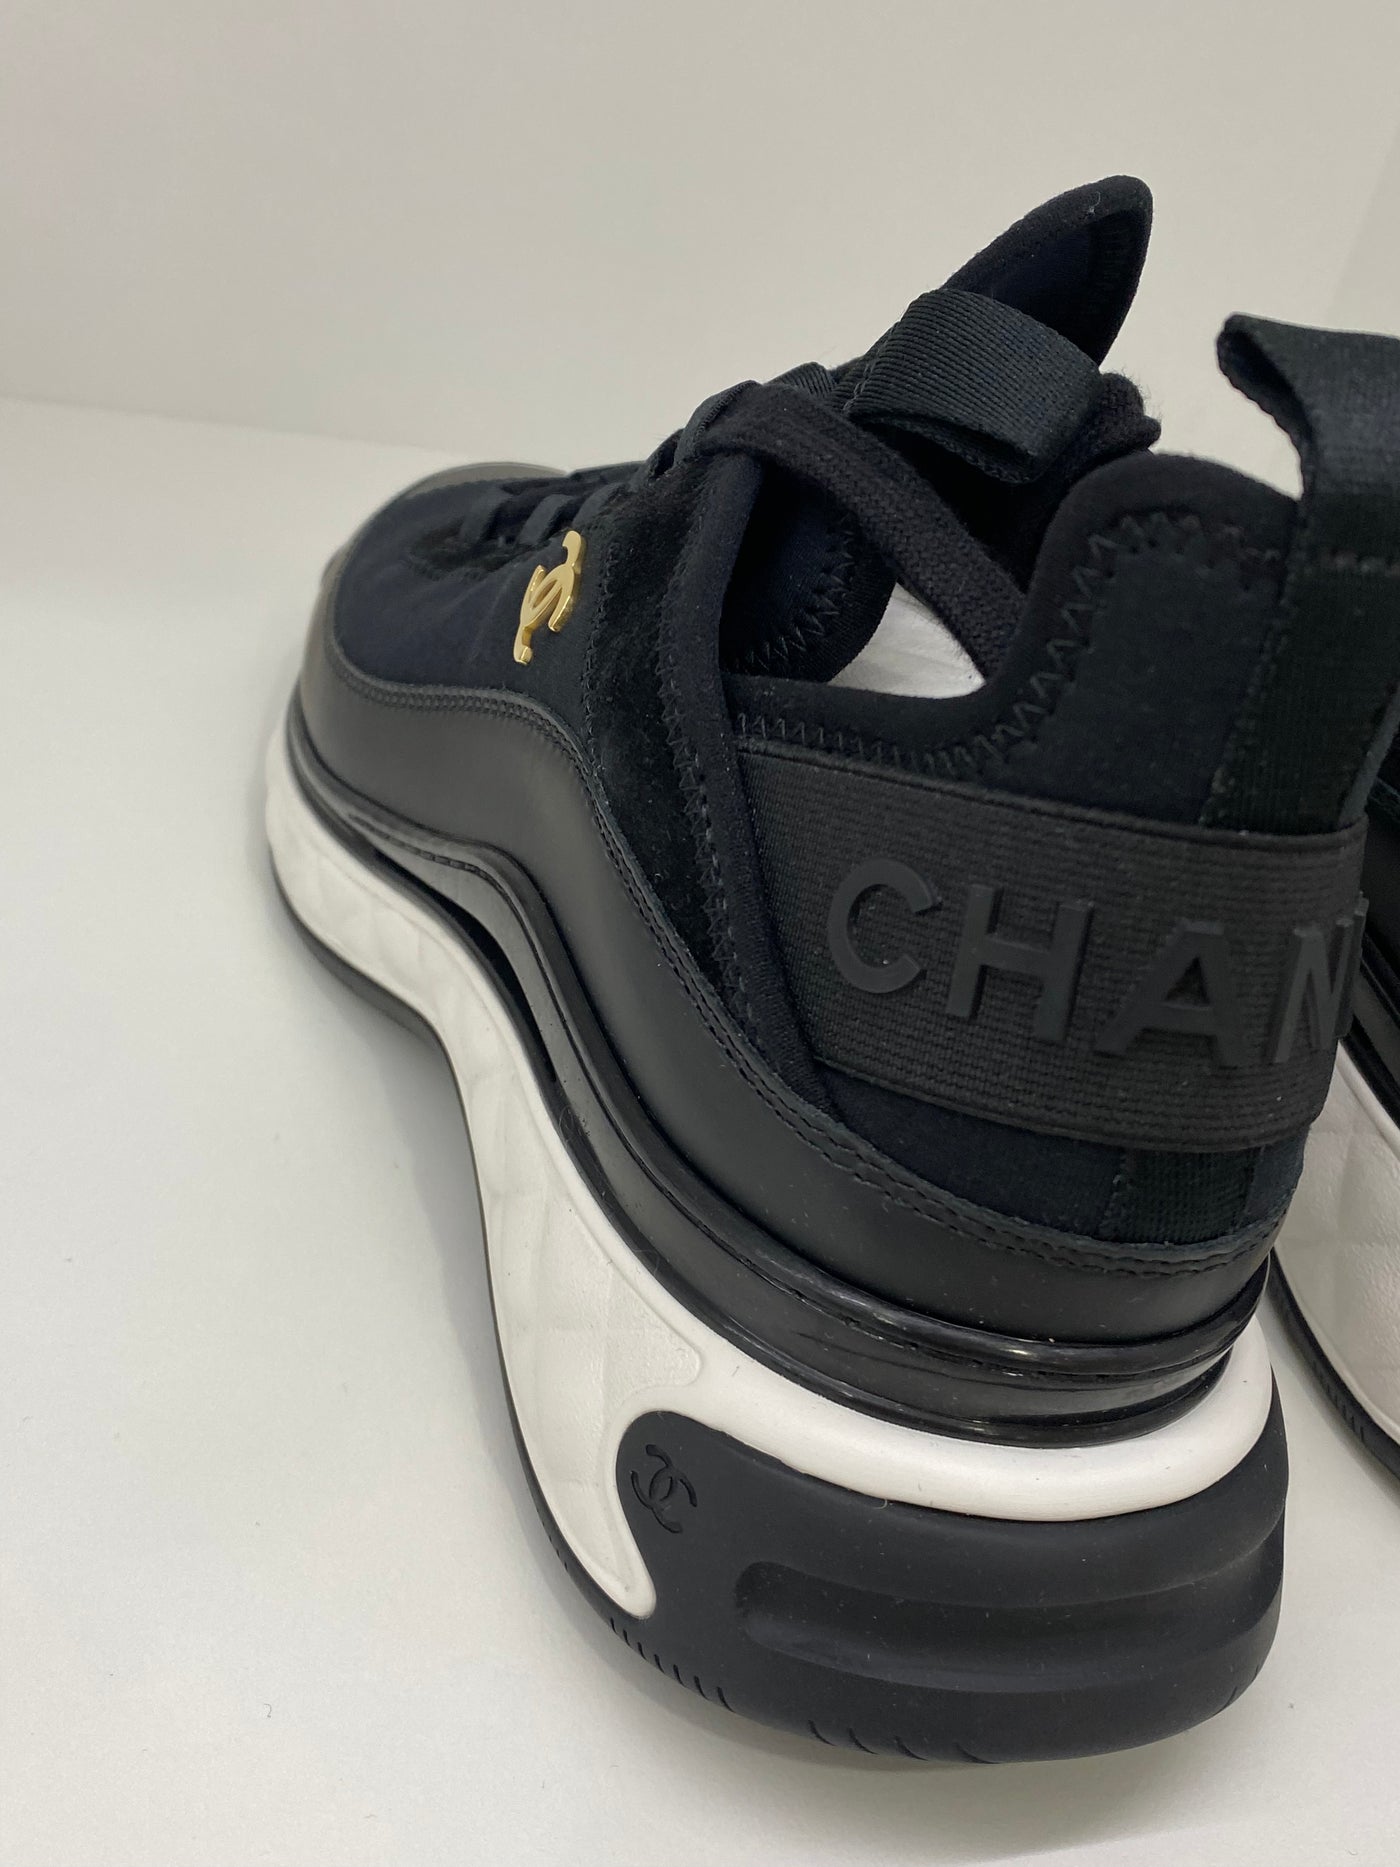 Chanel Black Sneakers - size 39